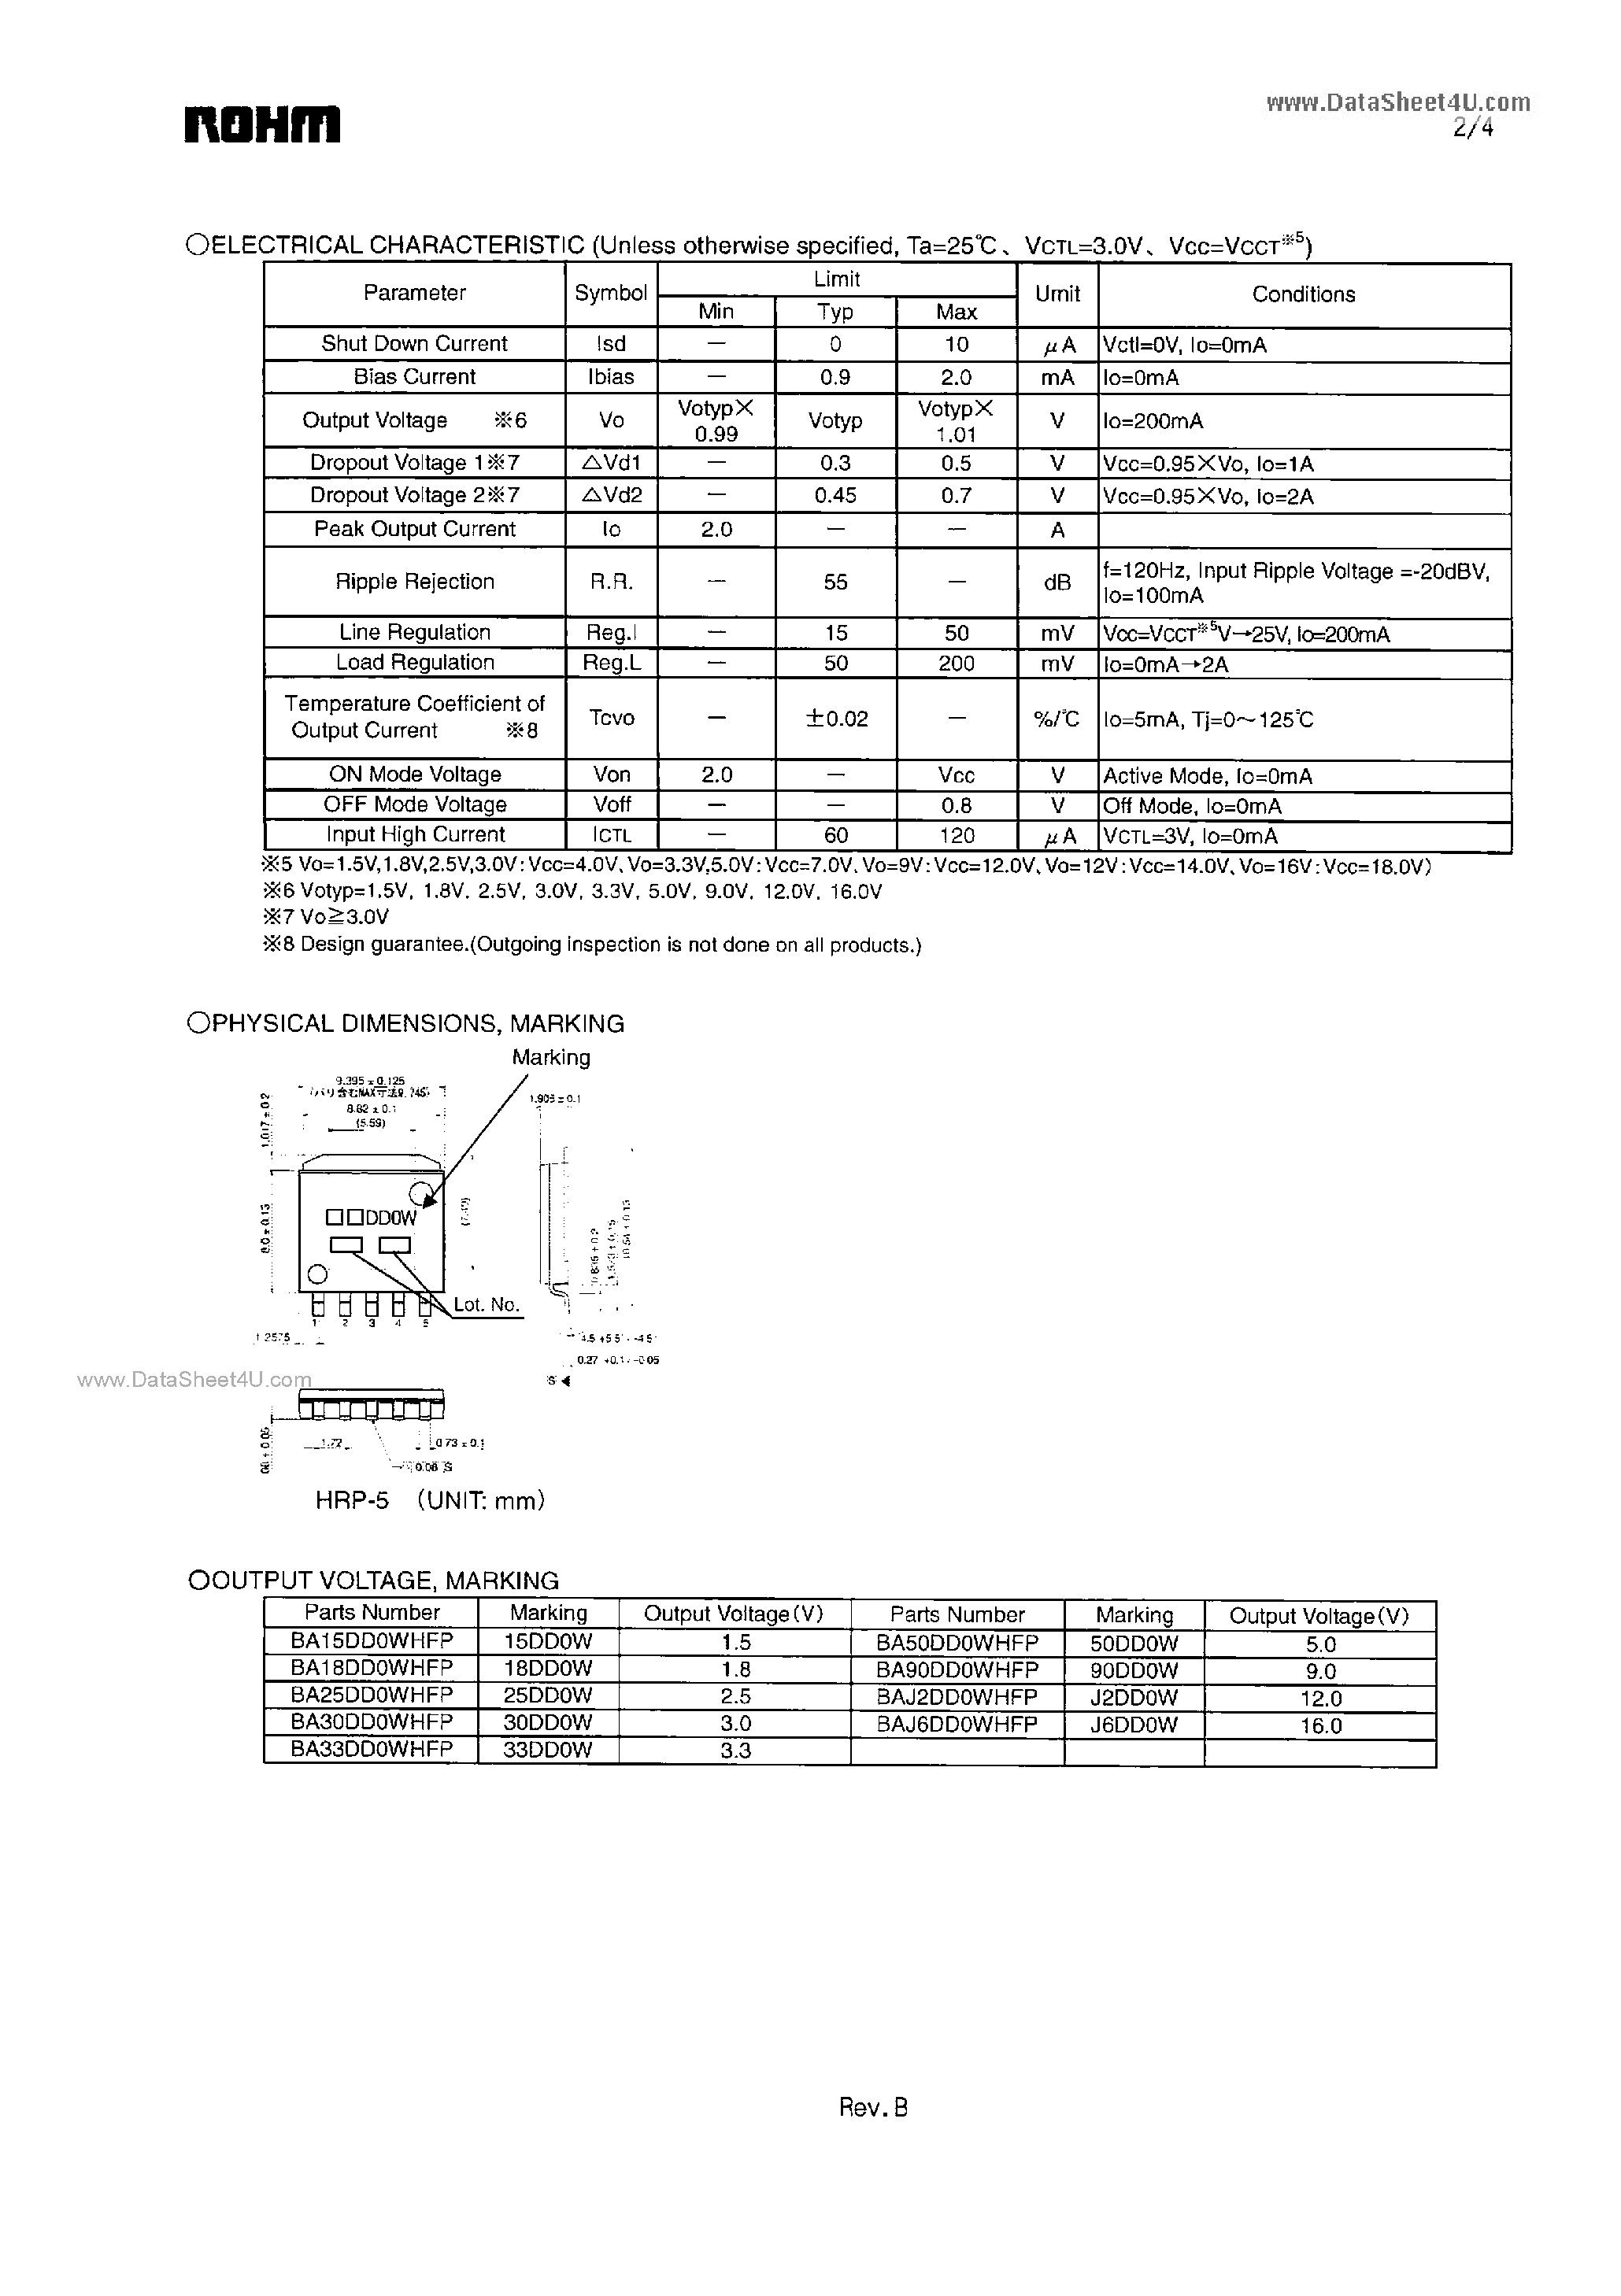 Даташит BA25DD0WHFP - 2A Low Dropout Voltage Regulator страница 2